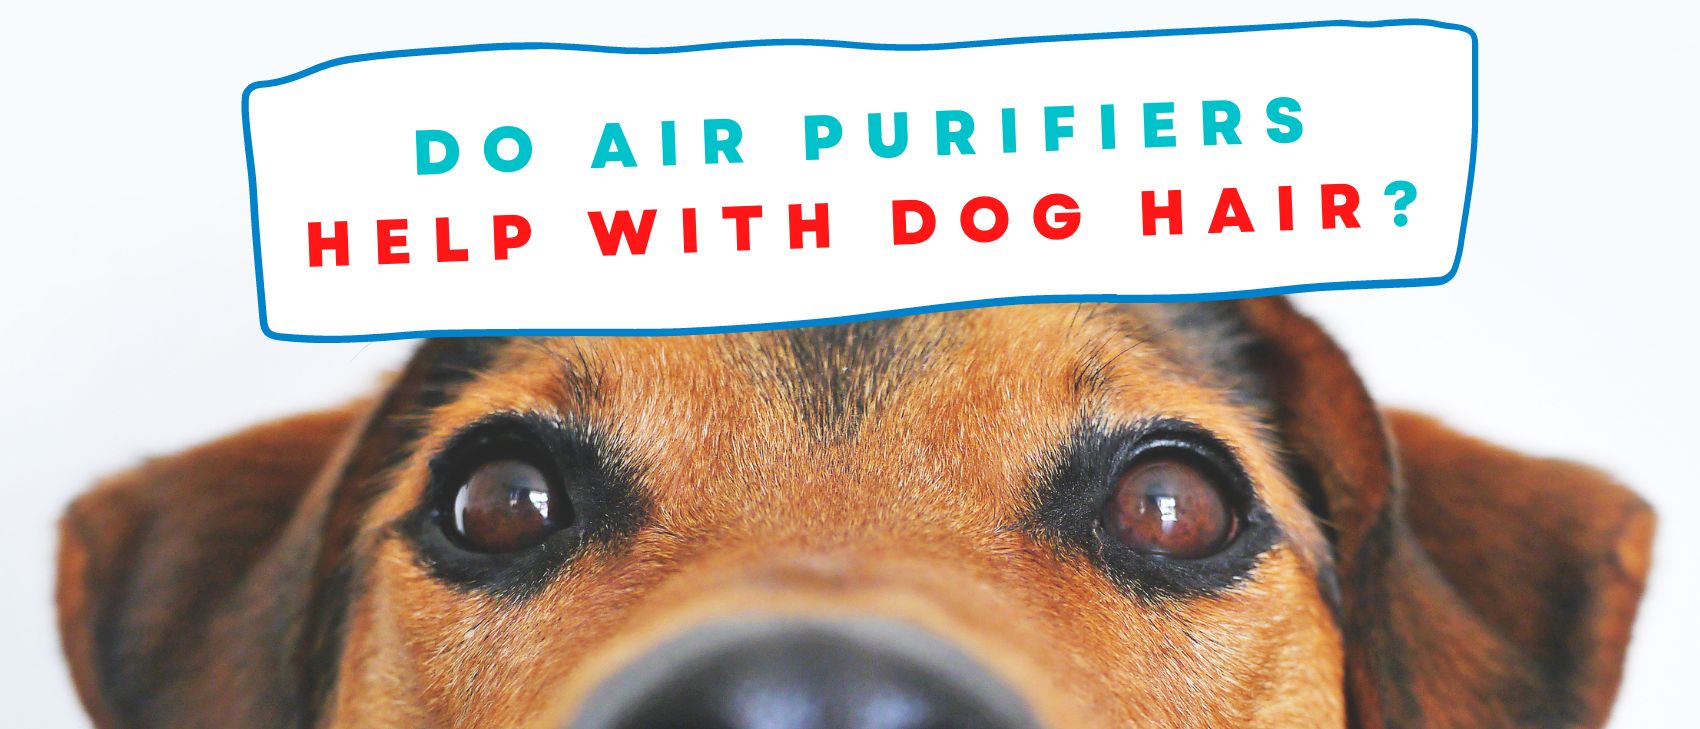 Do Air Purifiers Help with Dog Hair?